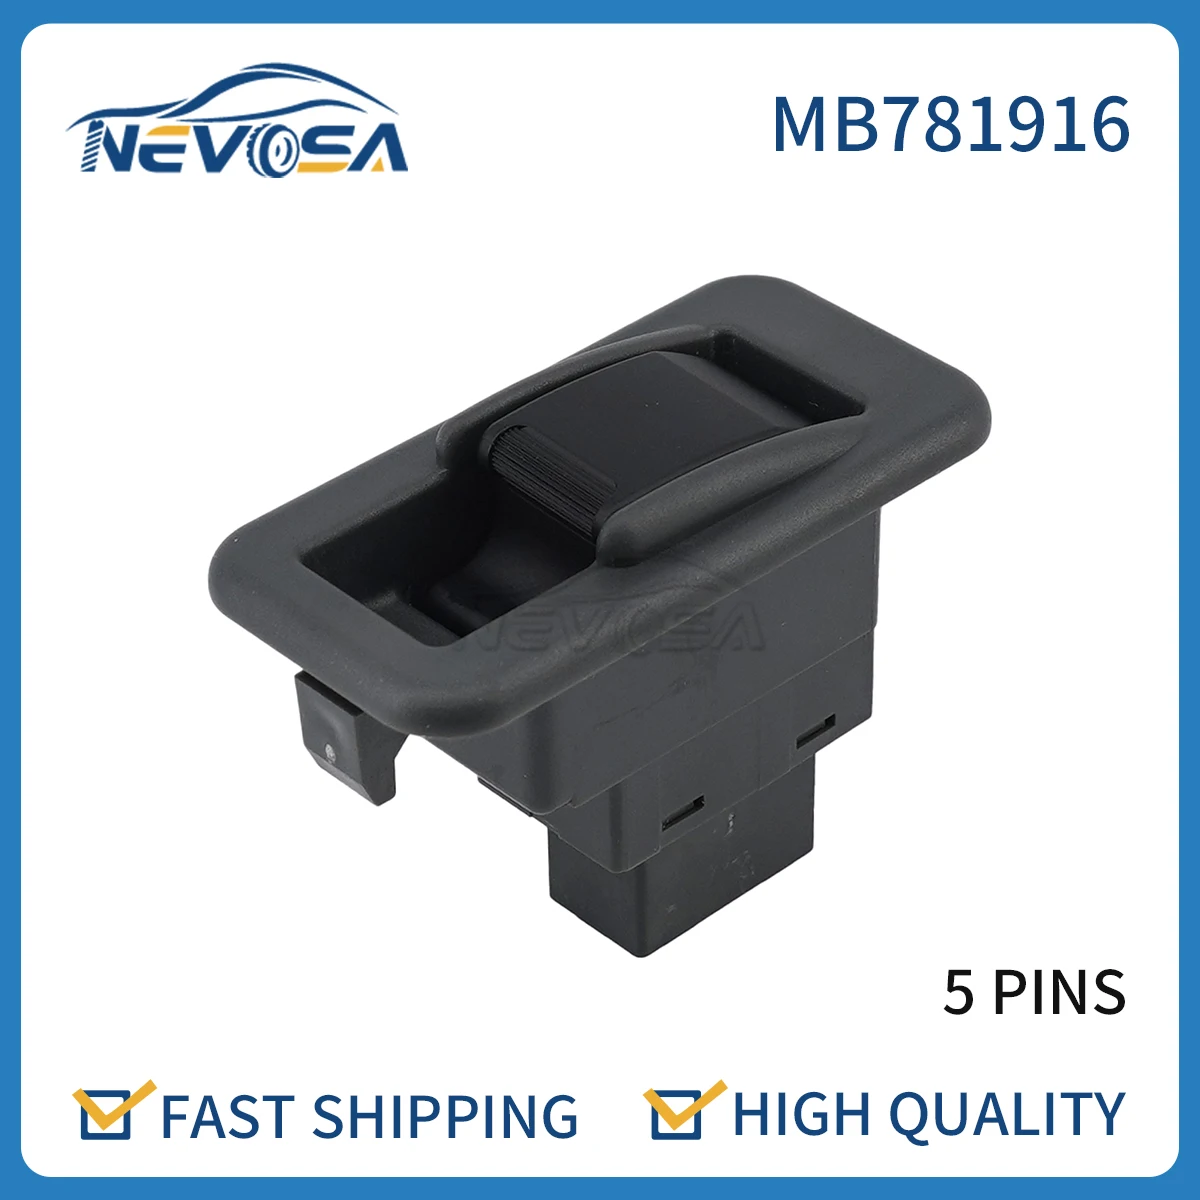 

Nevosa MB781916 Master Power Car Window Switch Single Button For Mitsubishi Pajero Shogun MK2 1990 1991 1992 1993-1997 MR781916